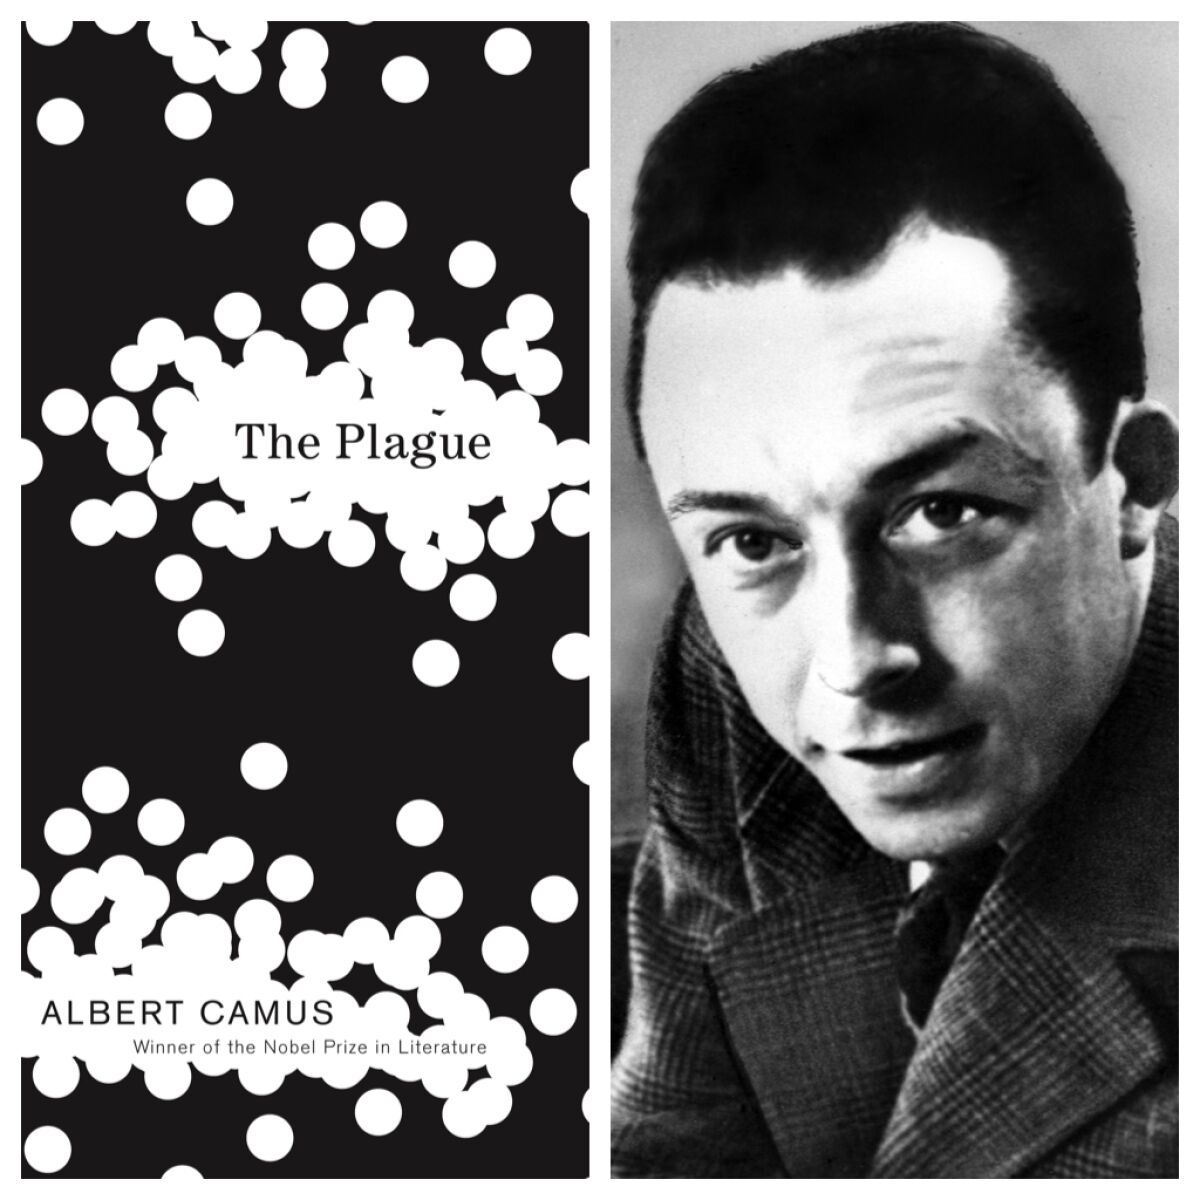 “The Plague" and author Albert Camus.